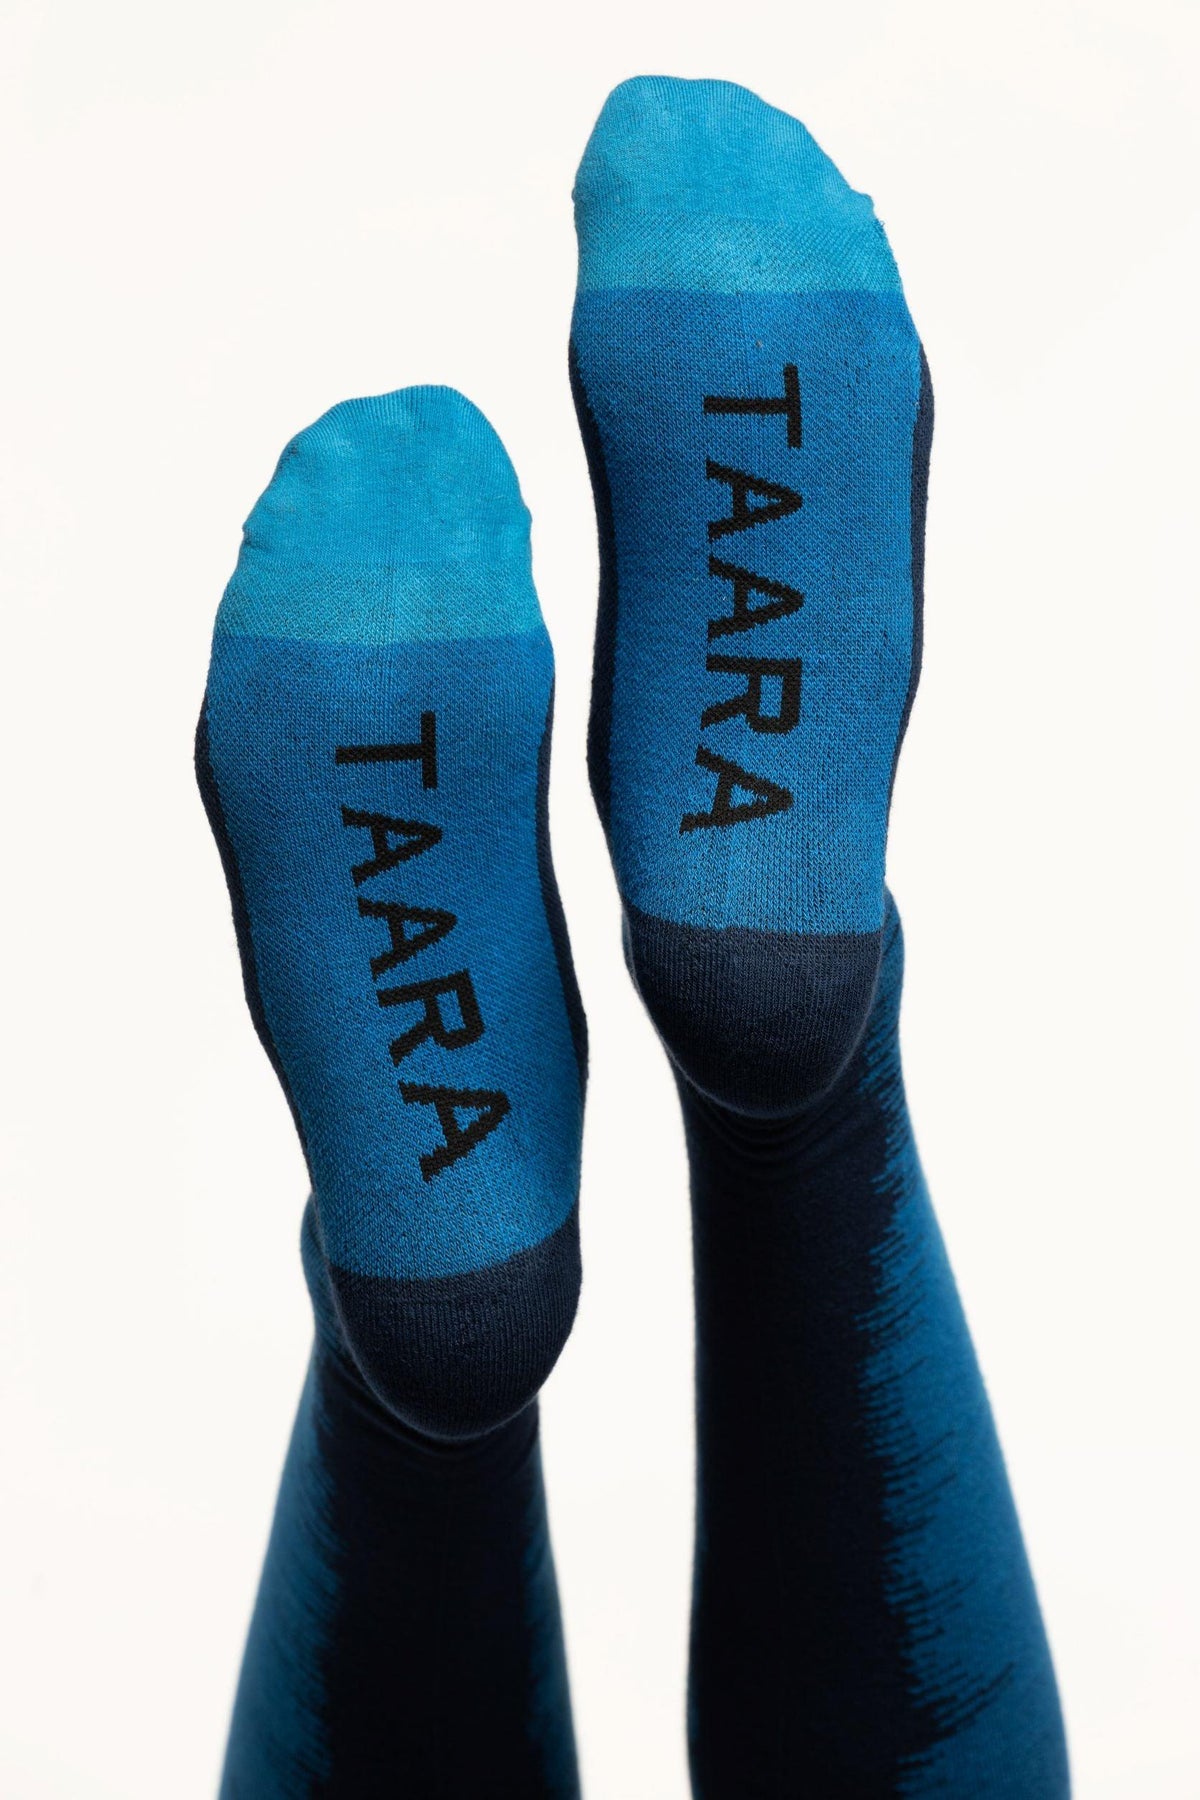 ASTRA Graduated Compression Sock - TAARA